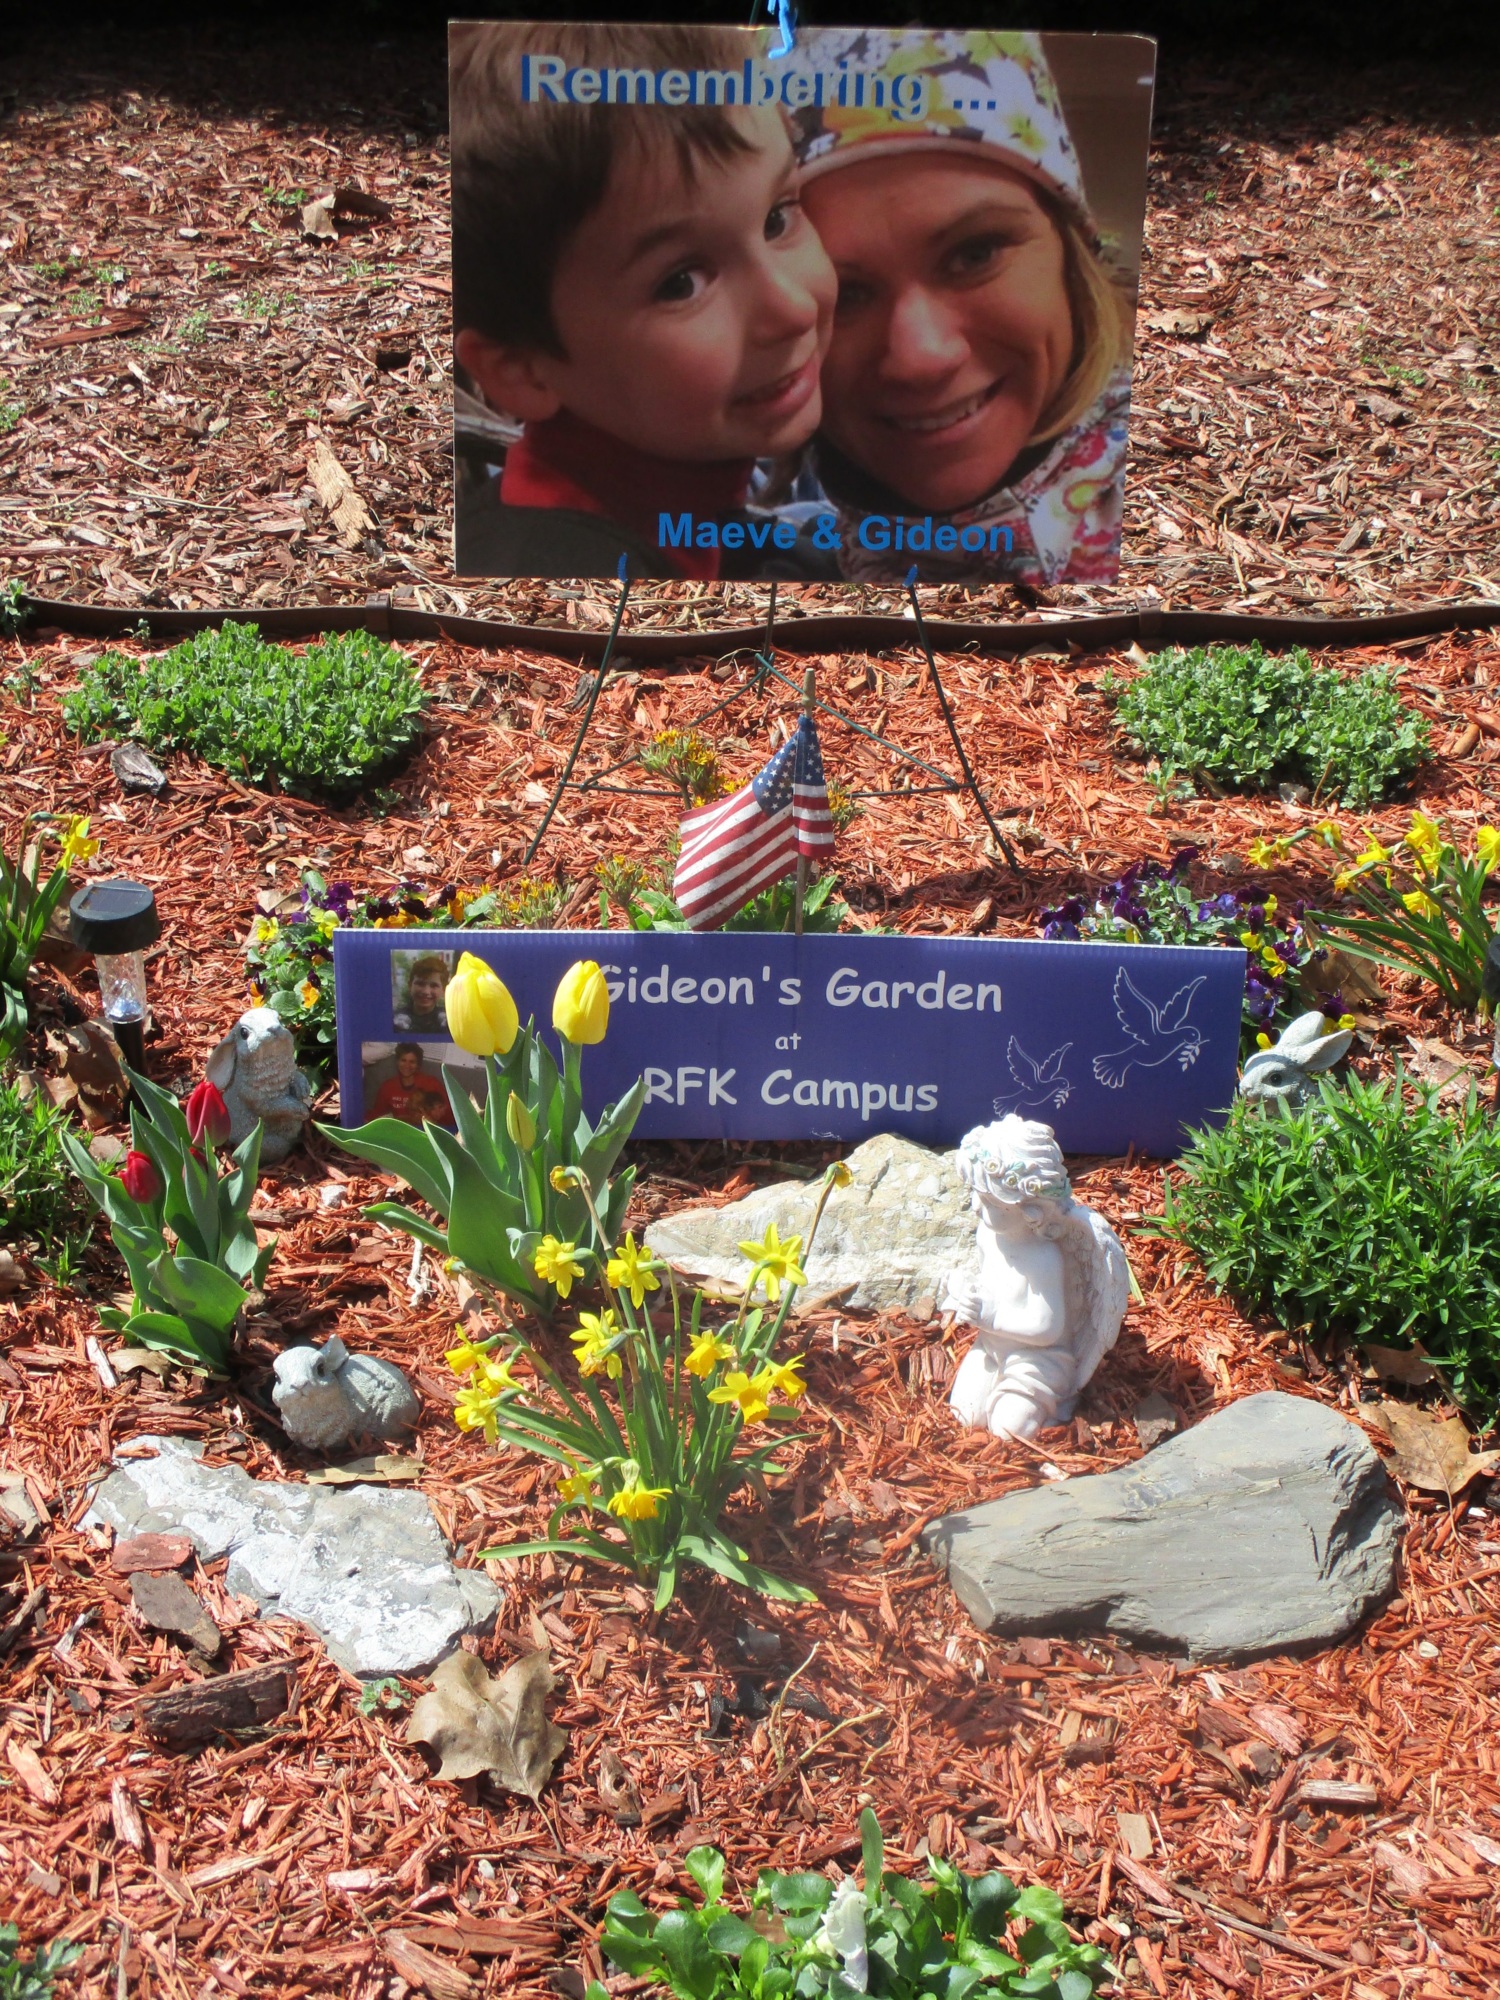 Gideon's Garden at RFK Stadium - photo of flowers and image of Gideon and Maeve